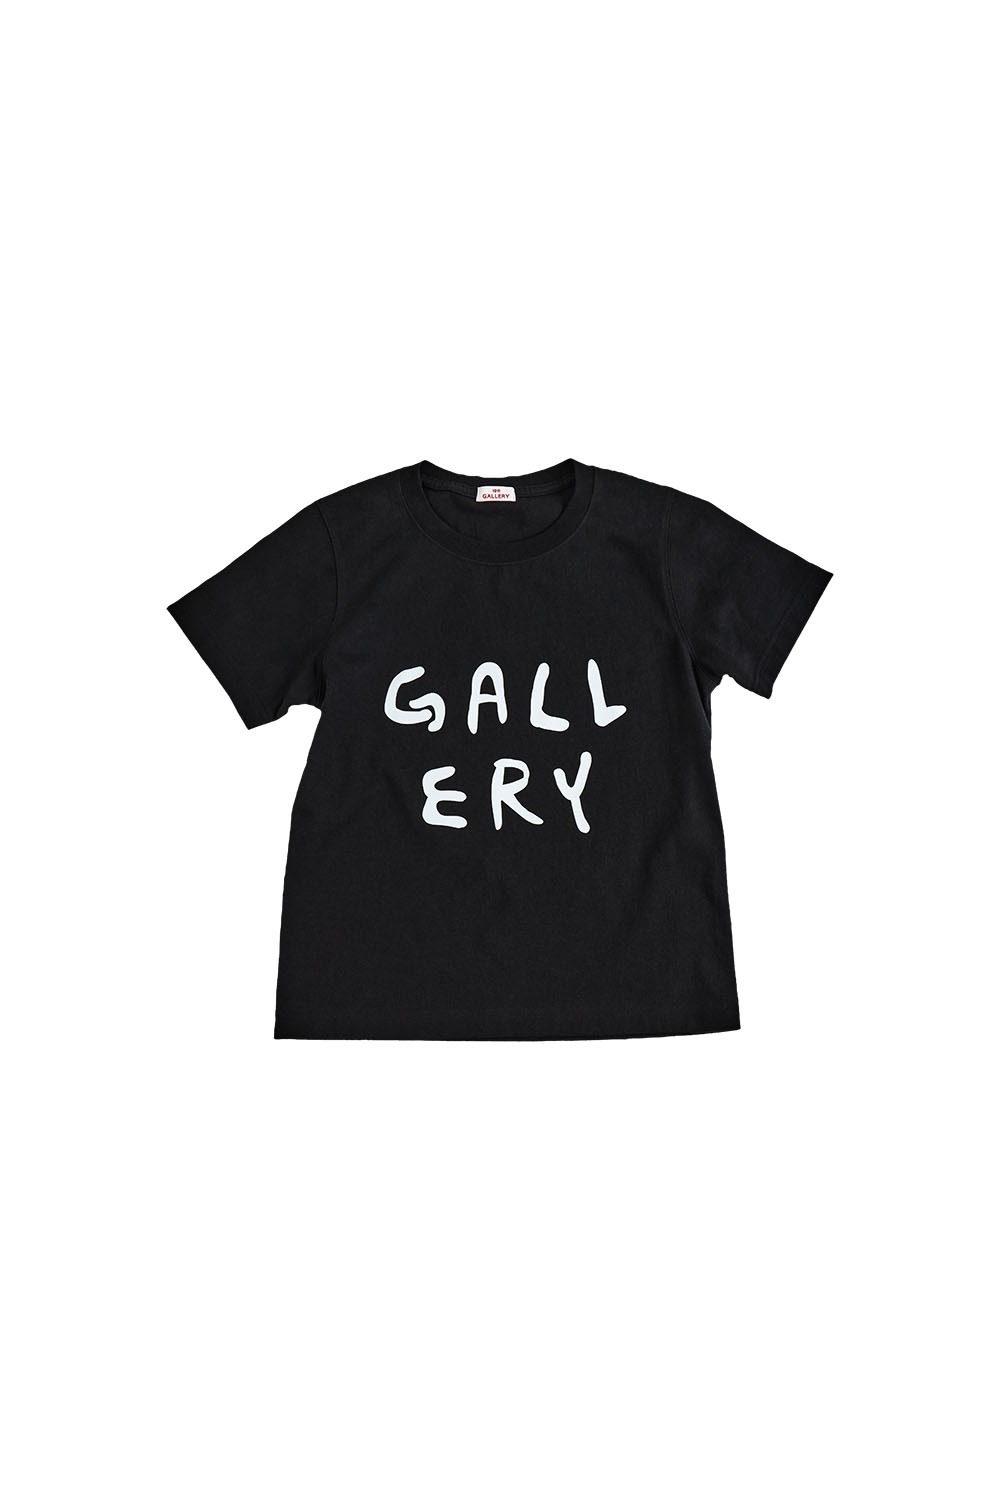 Gallery Baby T-shirt - Black